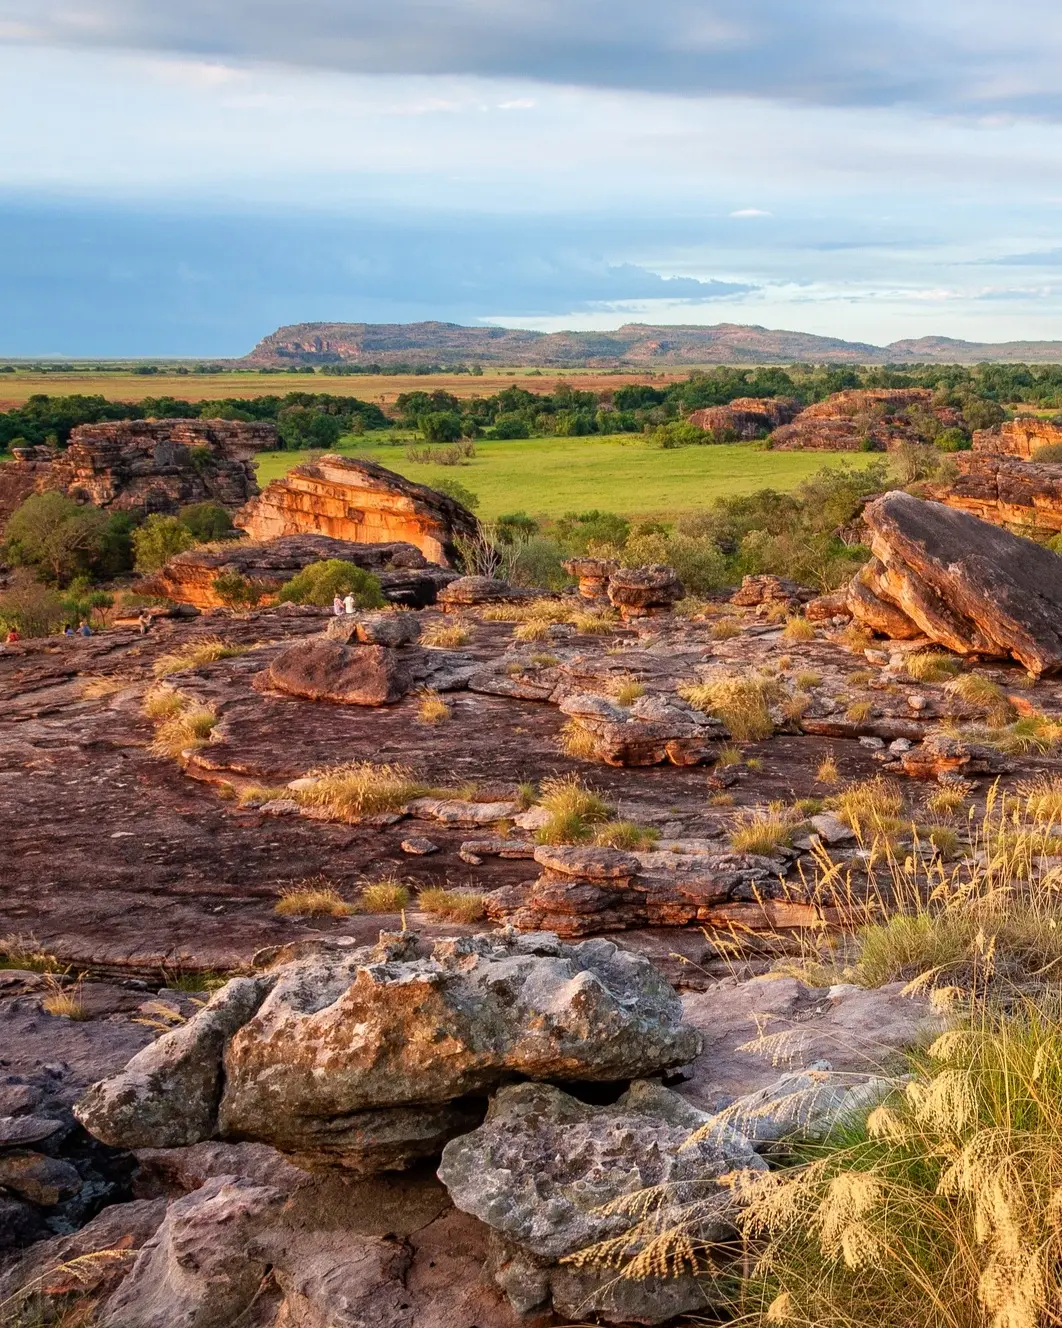 Rocky escarpment and flood plains of Ubirr, Kakadu National Park, Northern Territory. Image credit: Shutterstock